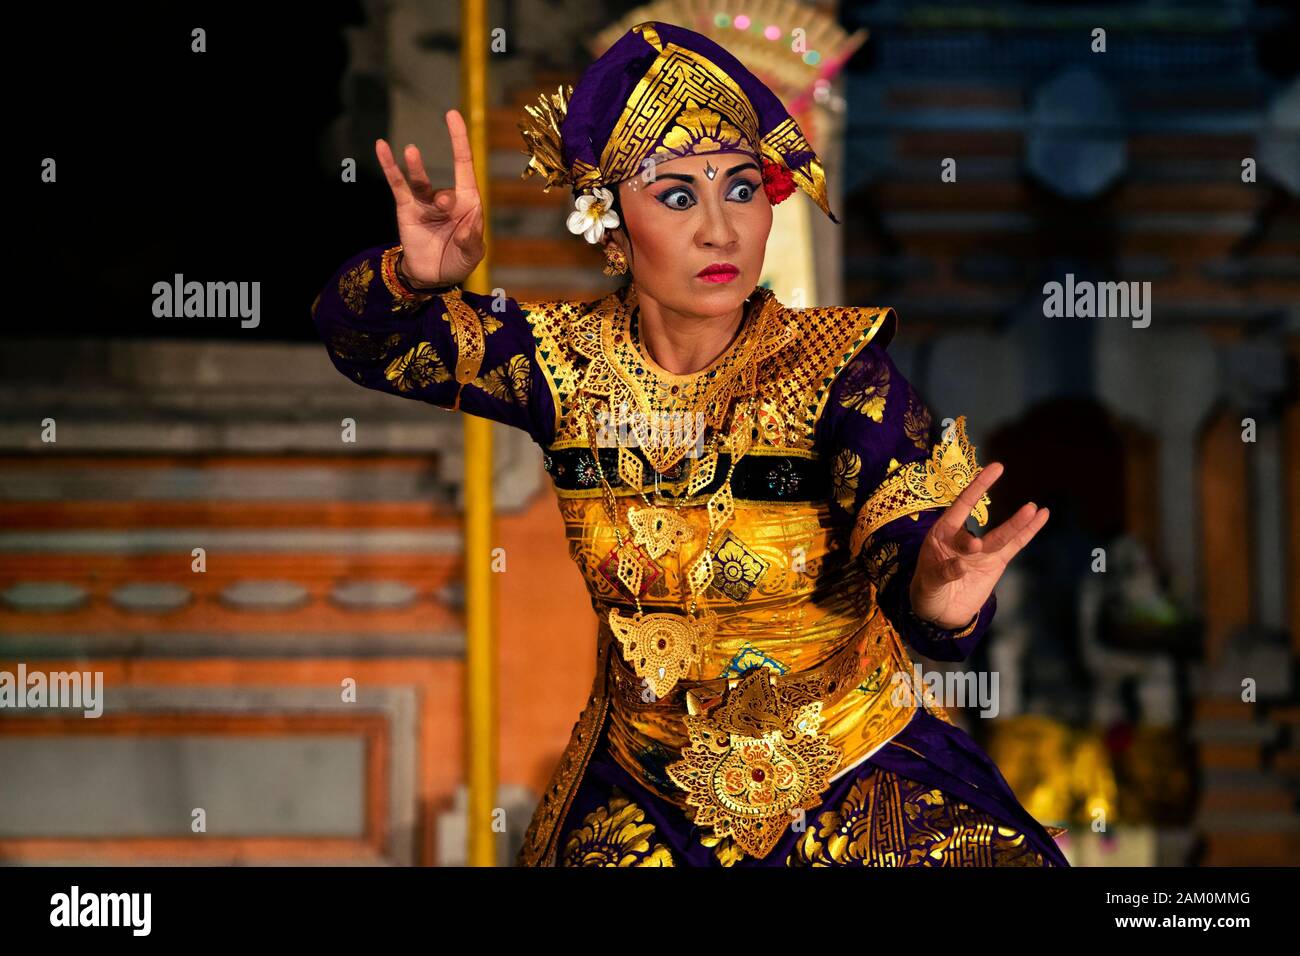 Balinese dancer performing Legong dance wearing traditional costumes at Pura Saraswati temple in Ubud, Bali, Indonesia. Stock Photo